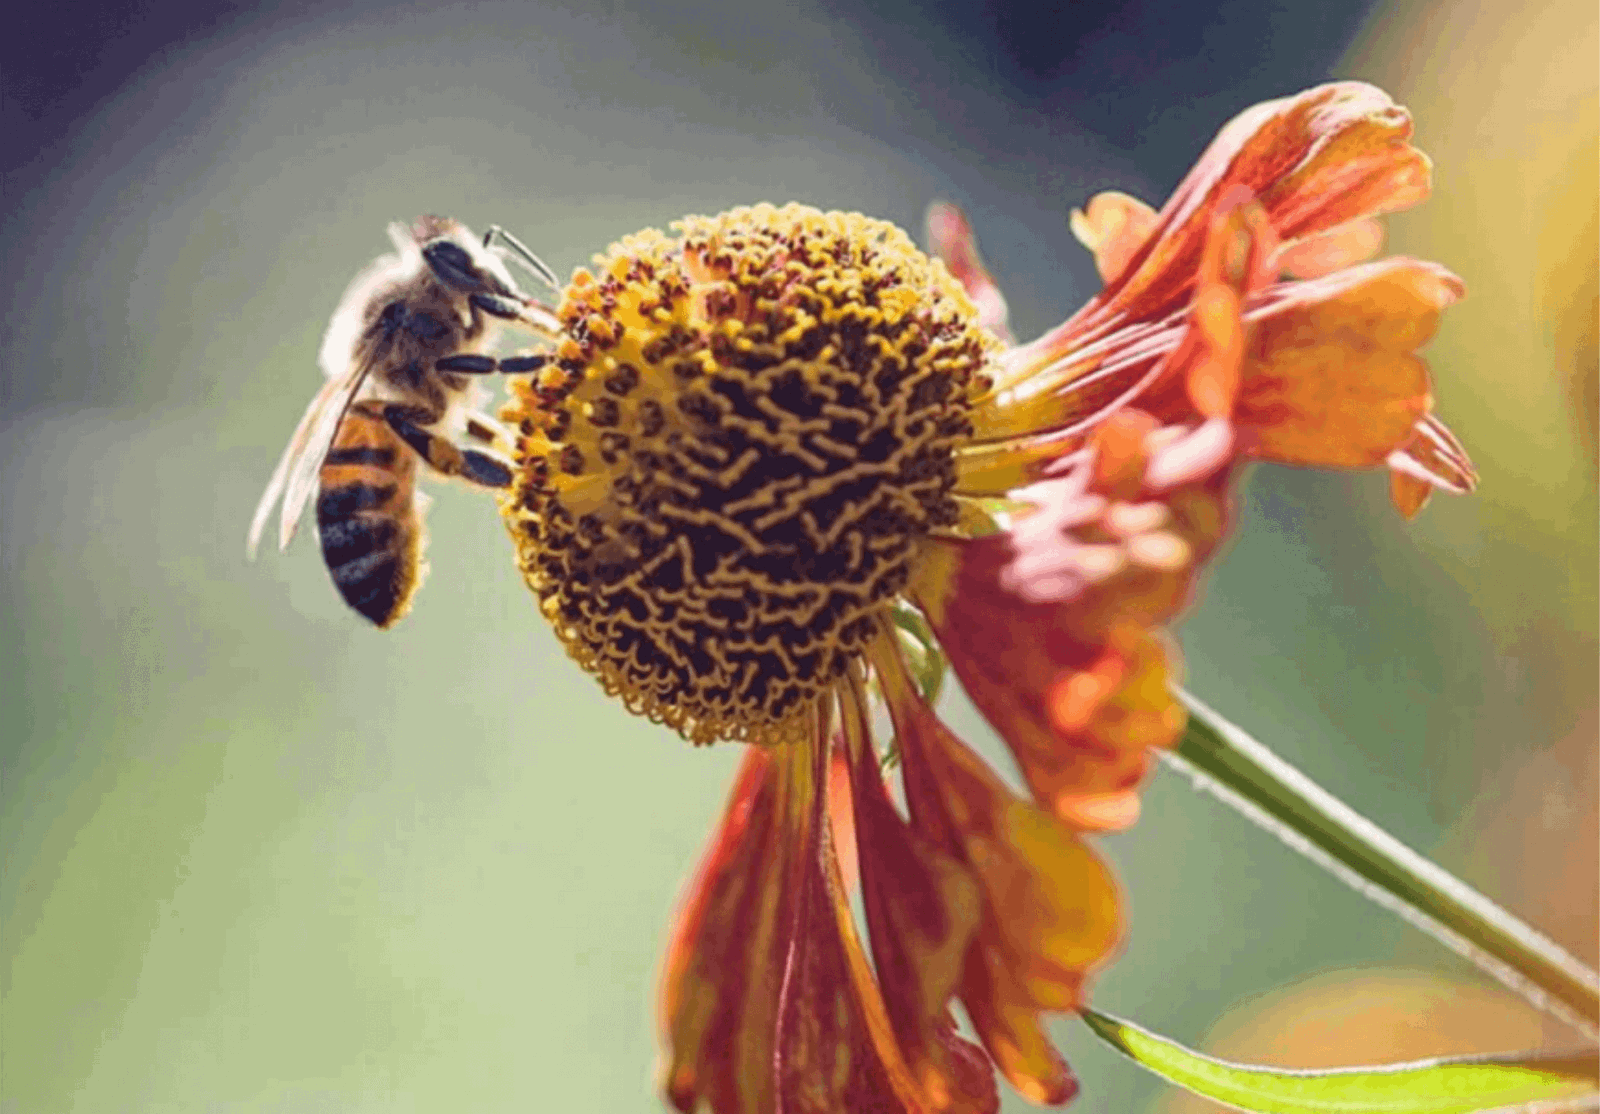 Burt S Bees Uk Happy World Bee Day Milled